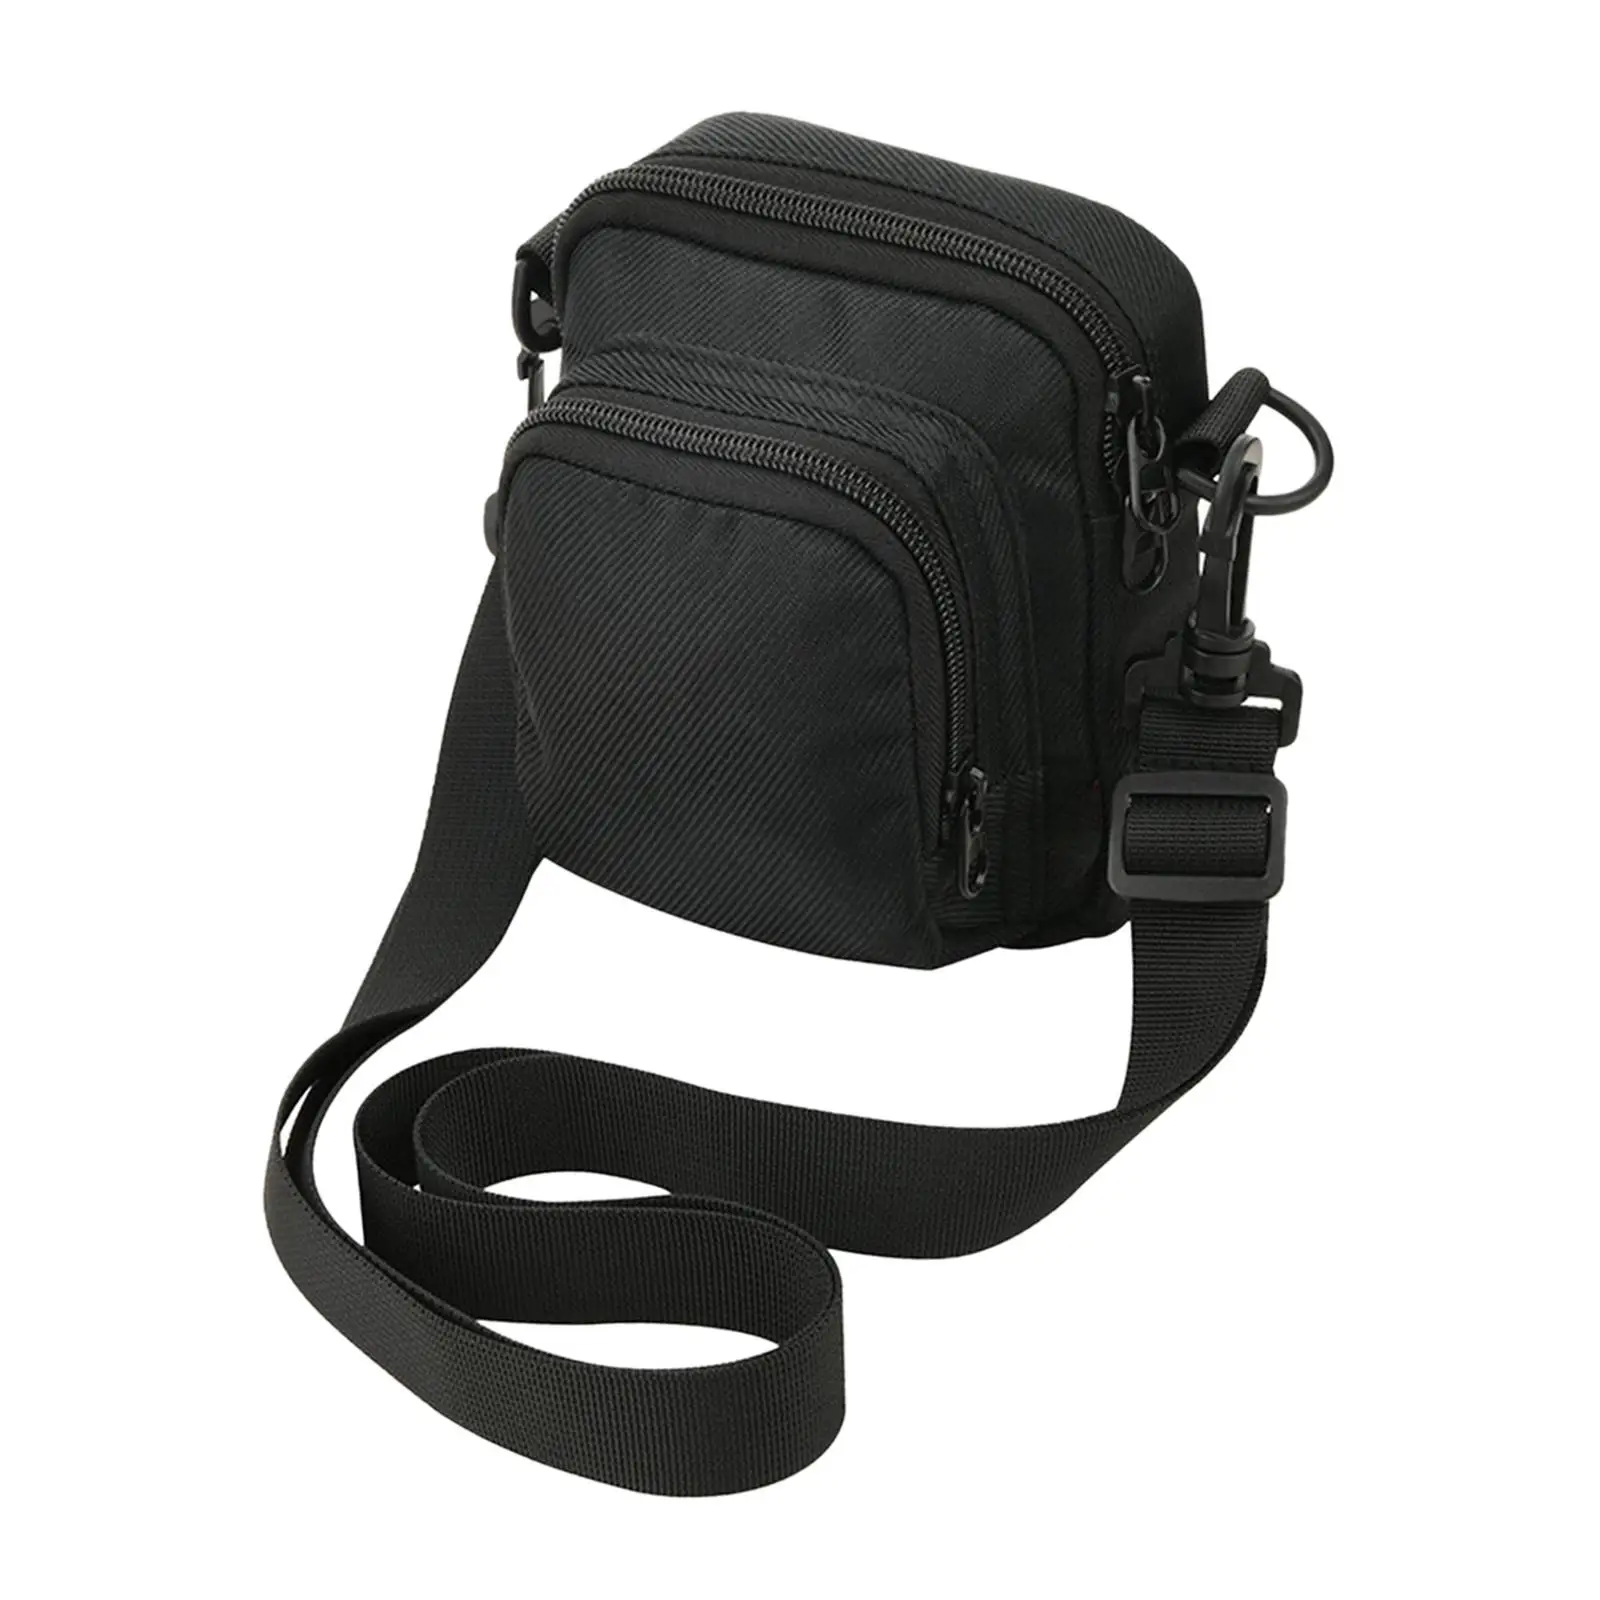 Protective Camera Case with Pocket and Adjustable Shoulder Strap Camera Bag Cover for Mini Link1 2 Instant Photo Printer